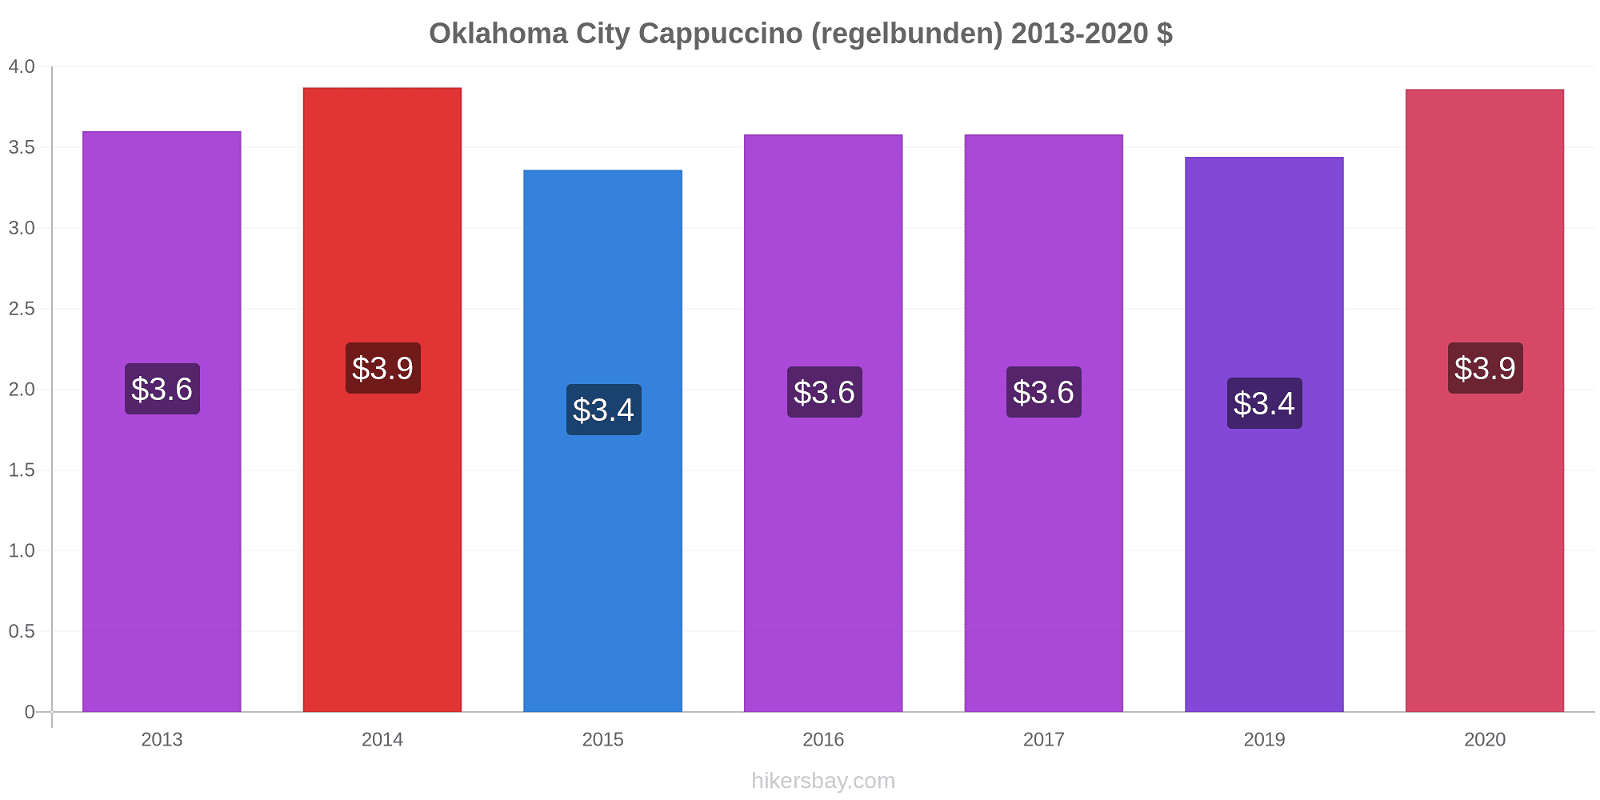 Oklahoma City prisförändringar Cappuccino (regelbunden) hikersbay.com